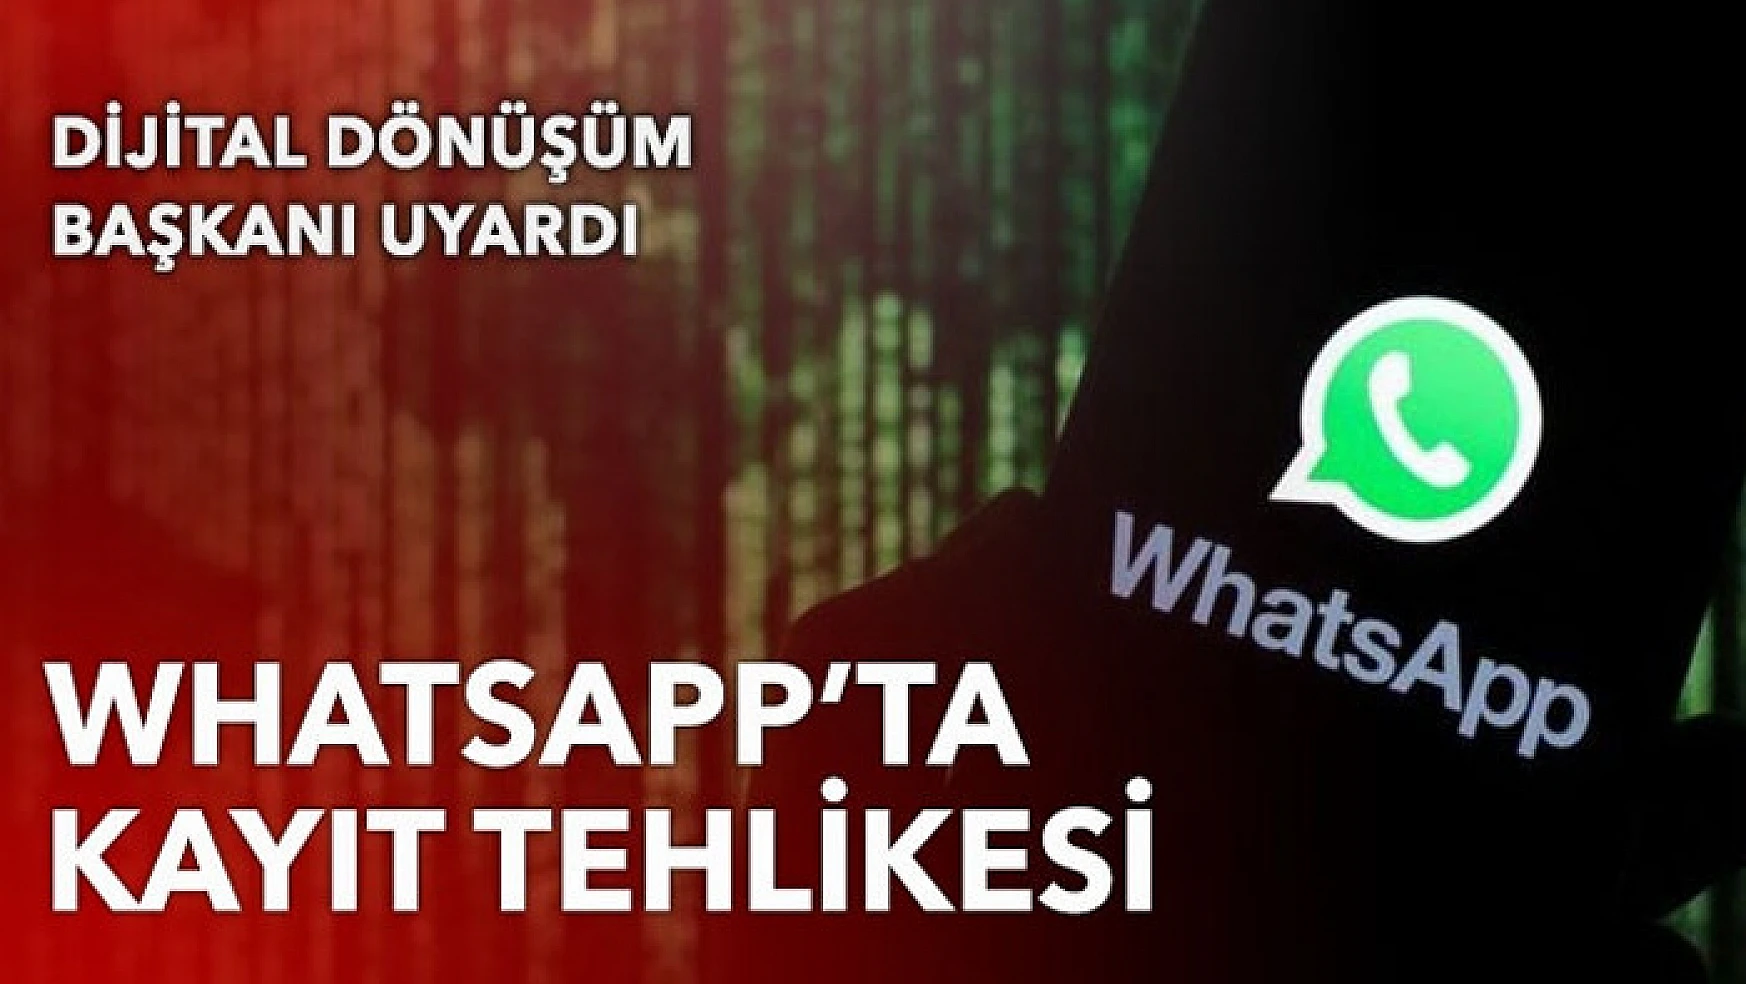 WhatsApp'ta kayıt tehlikesi